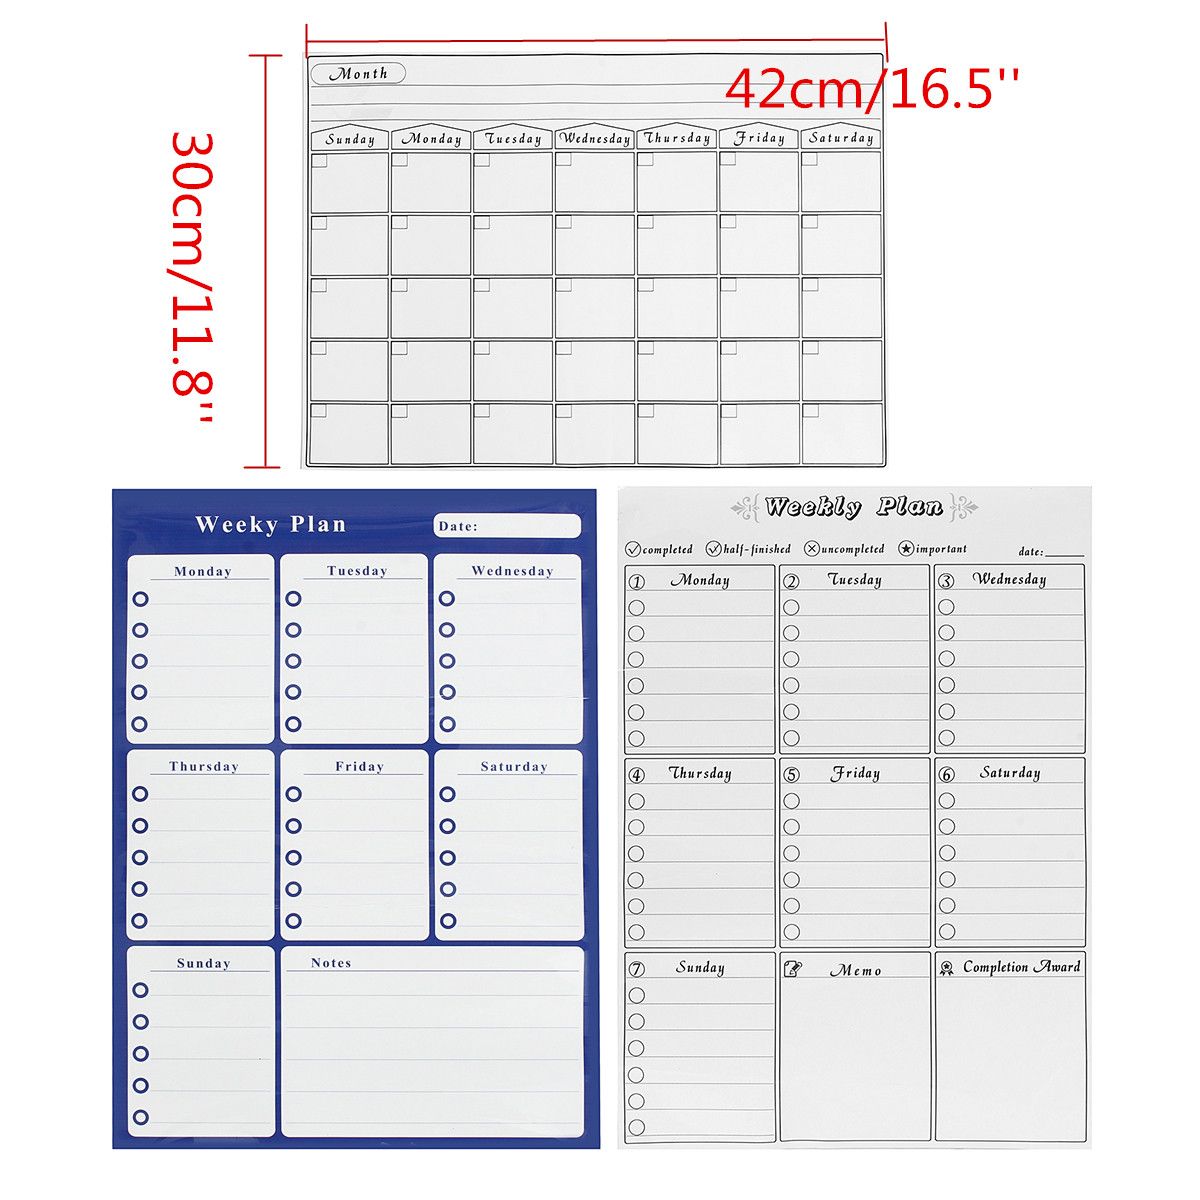 Weeky-Monthly-Magnetic-Whiteboard-Sticker-Fridge-Wall-Memo-Plan-Shopping-List-Board-1557312